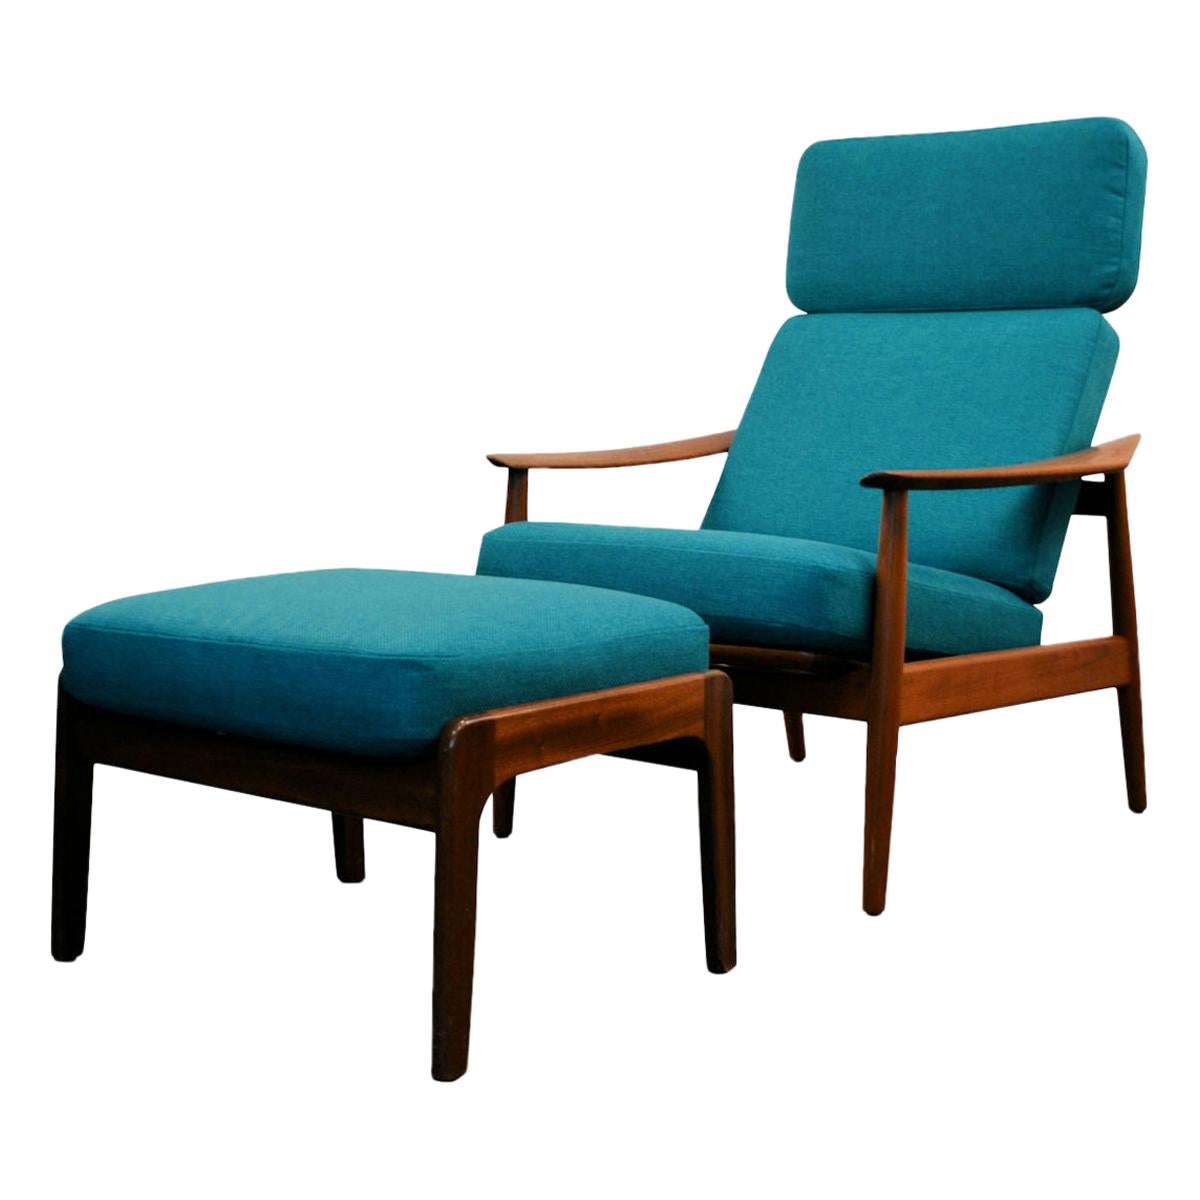 Vintage Arne Vodder Fd-164 Teak Lounge Chair and Ottoman For Sale